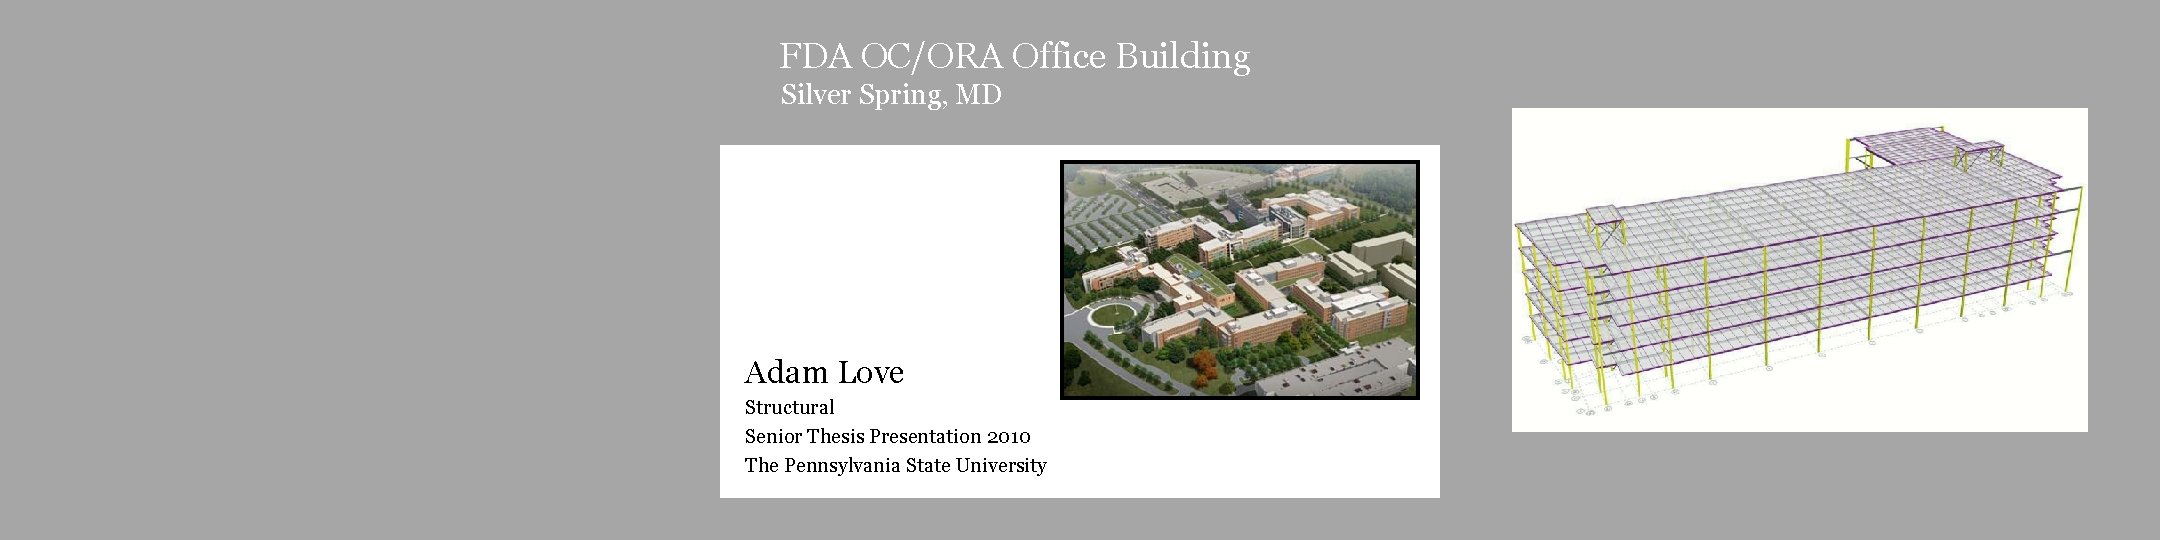 FDA OC/ORA Office Building Silver Spring, MD Adam Love Structural Senior Thesis Presentation 2010